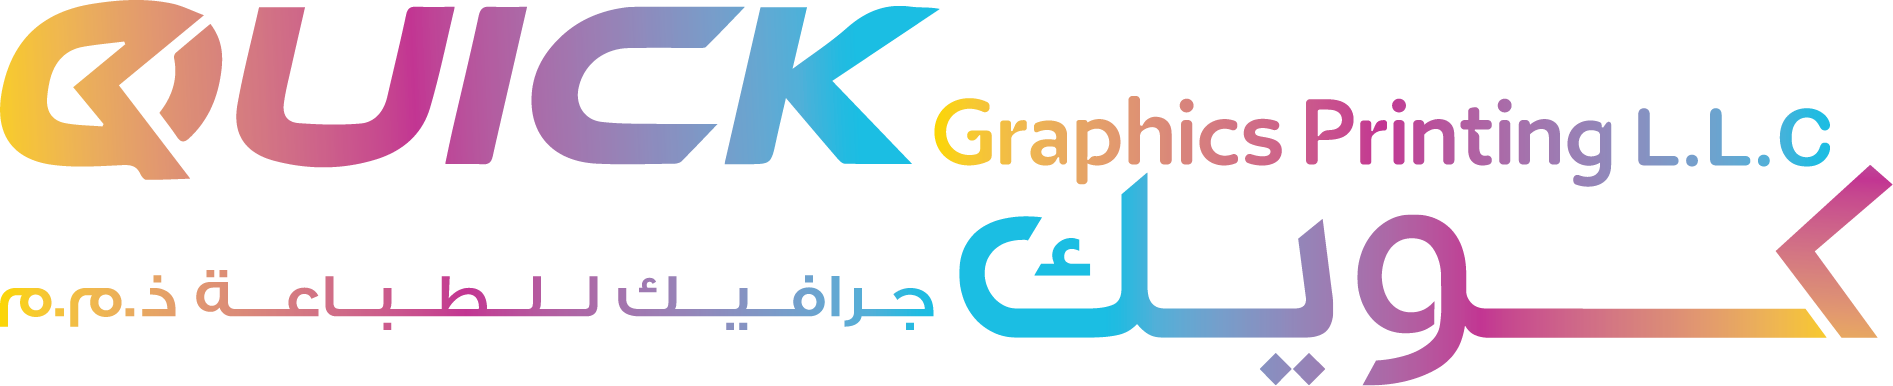 Quick Graphics Printing Logo